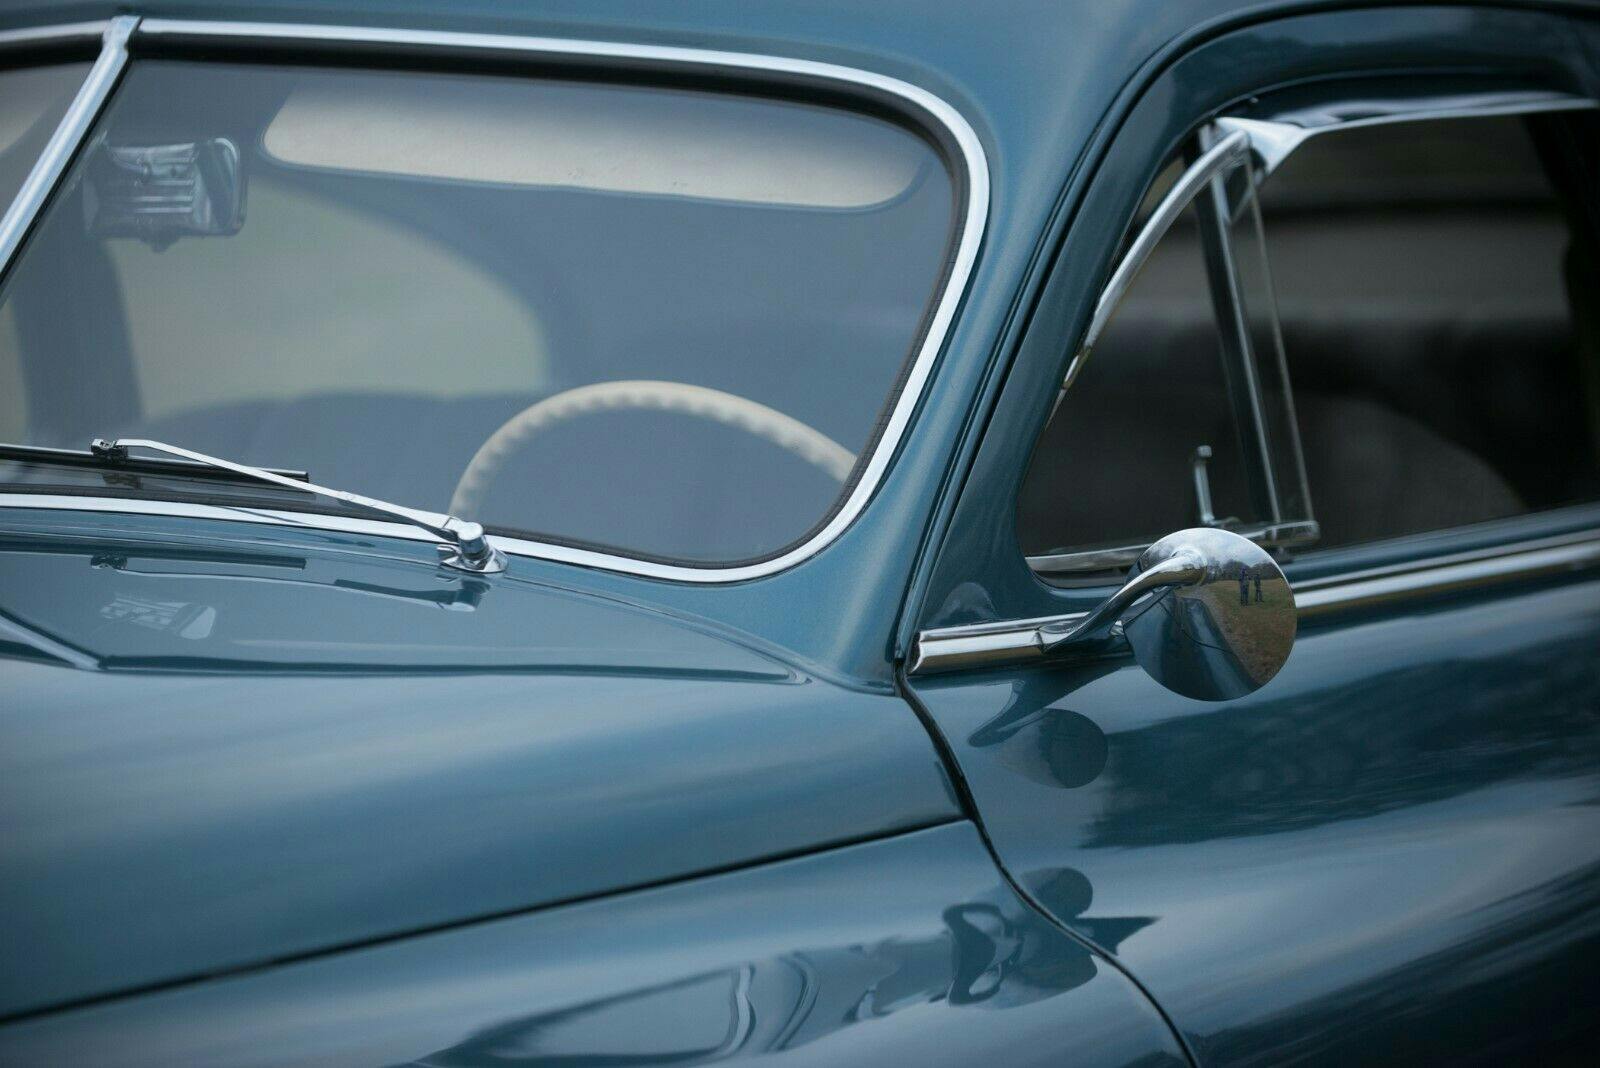 1949 Packard Deluxe Club Sedan - Drivers Side - Close-up Windshield and Steering Wheel